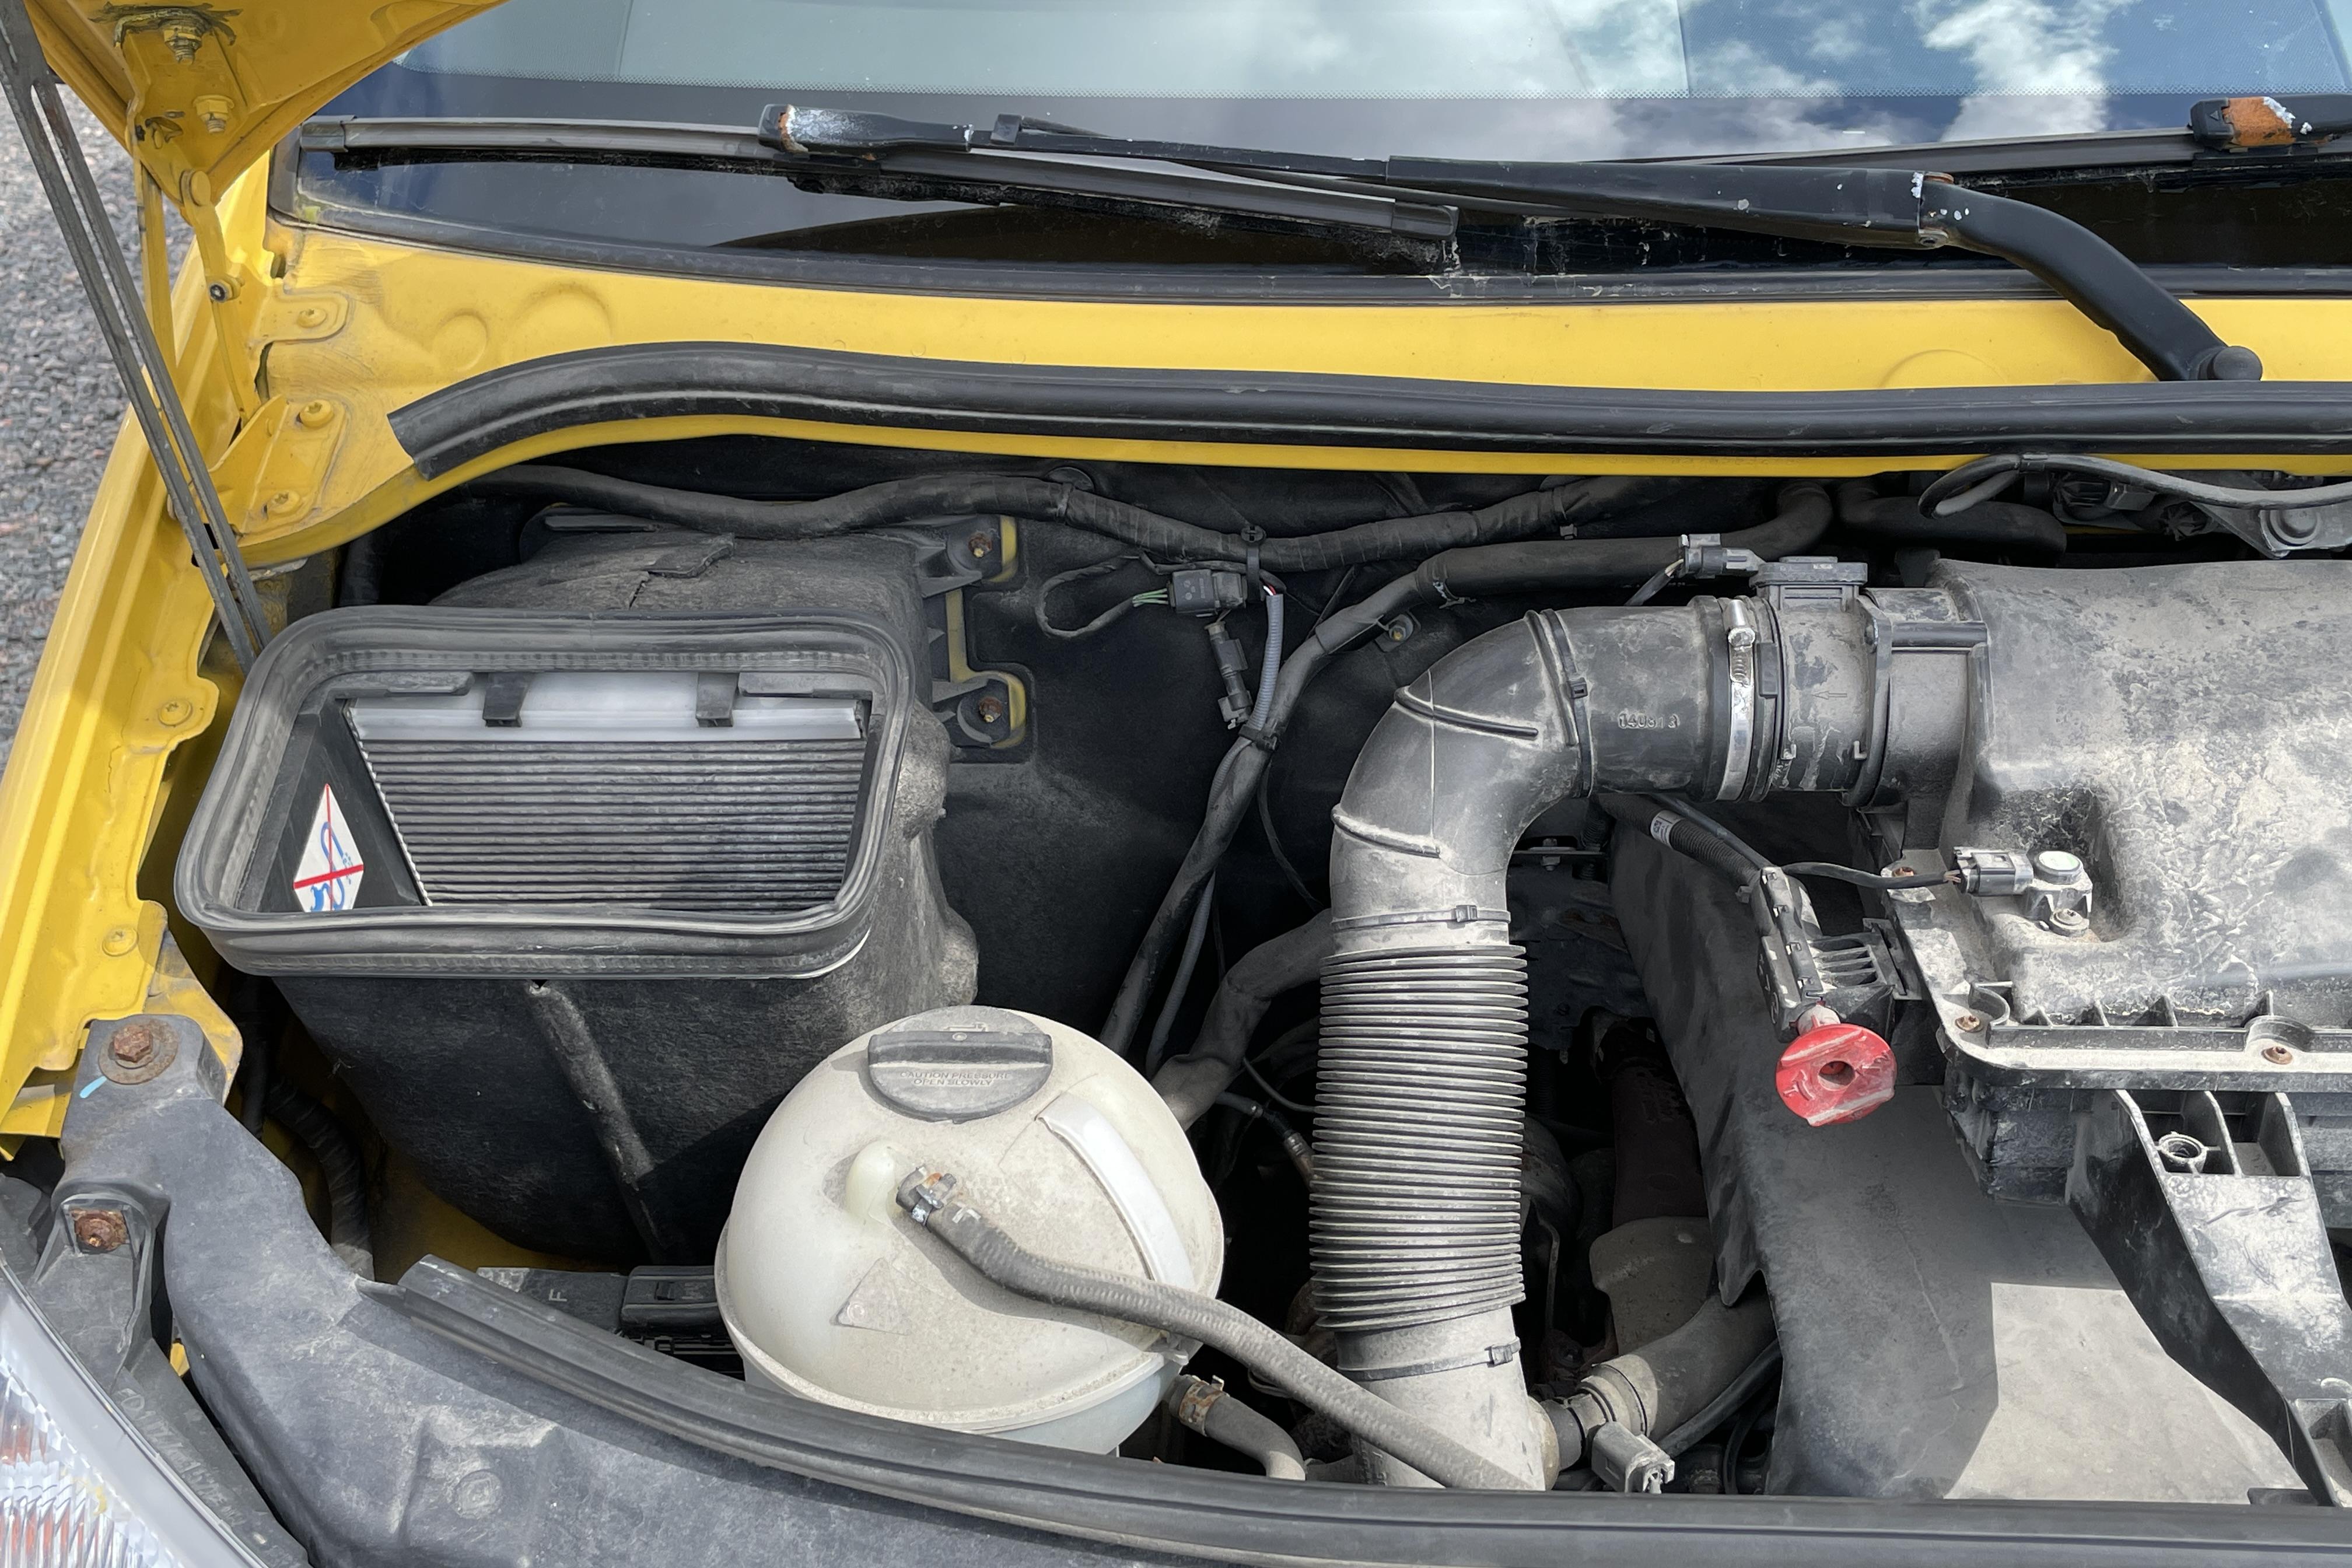 Mercedes Sprinter 516 CDI (163hk) - 235 537 km - Manual - yellow - 2014